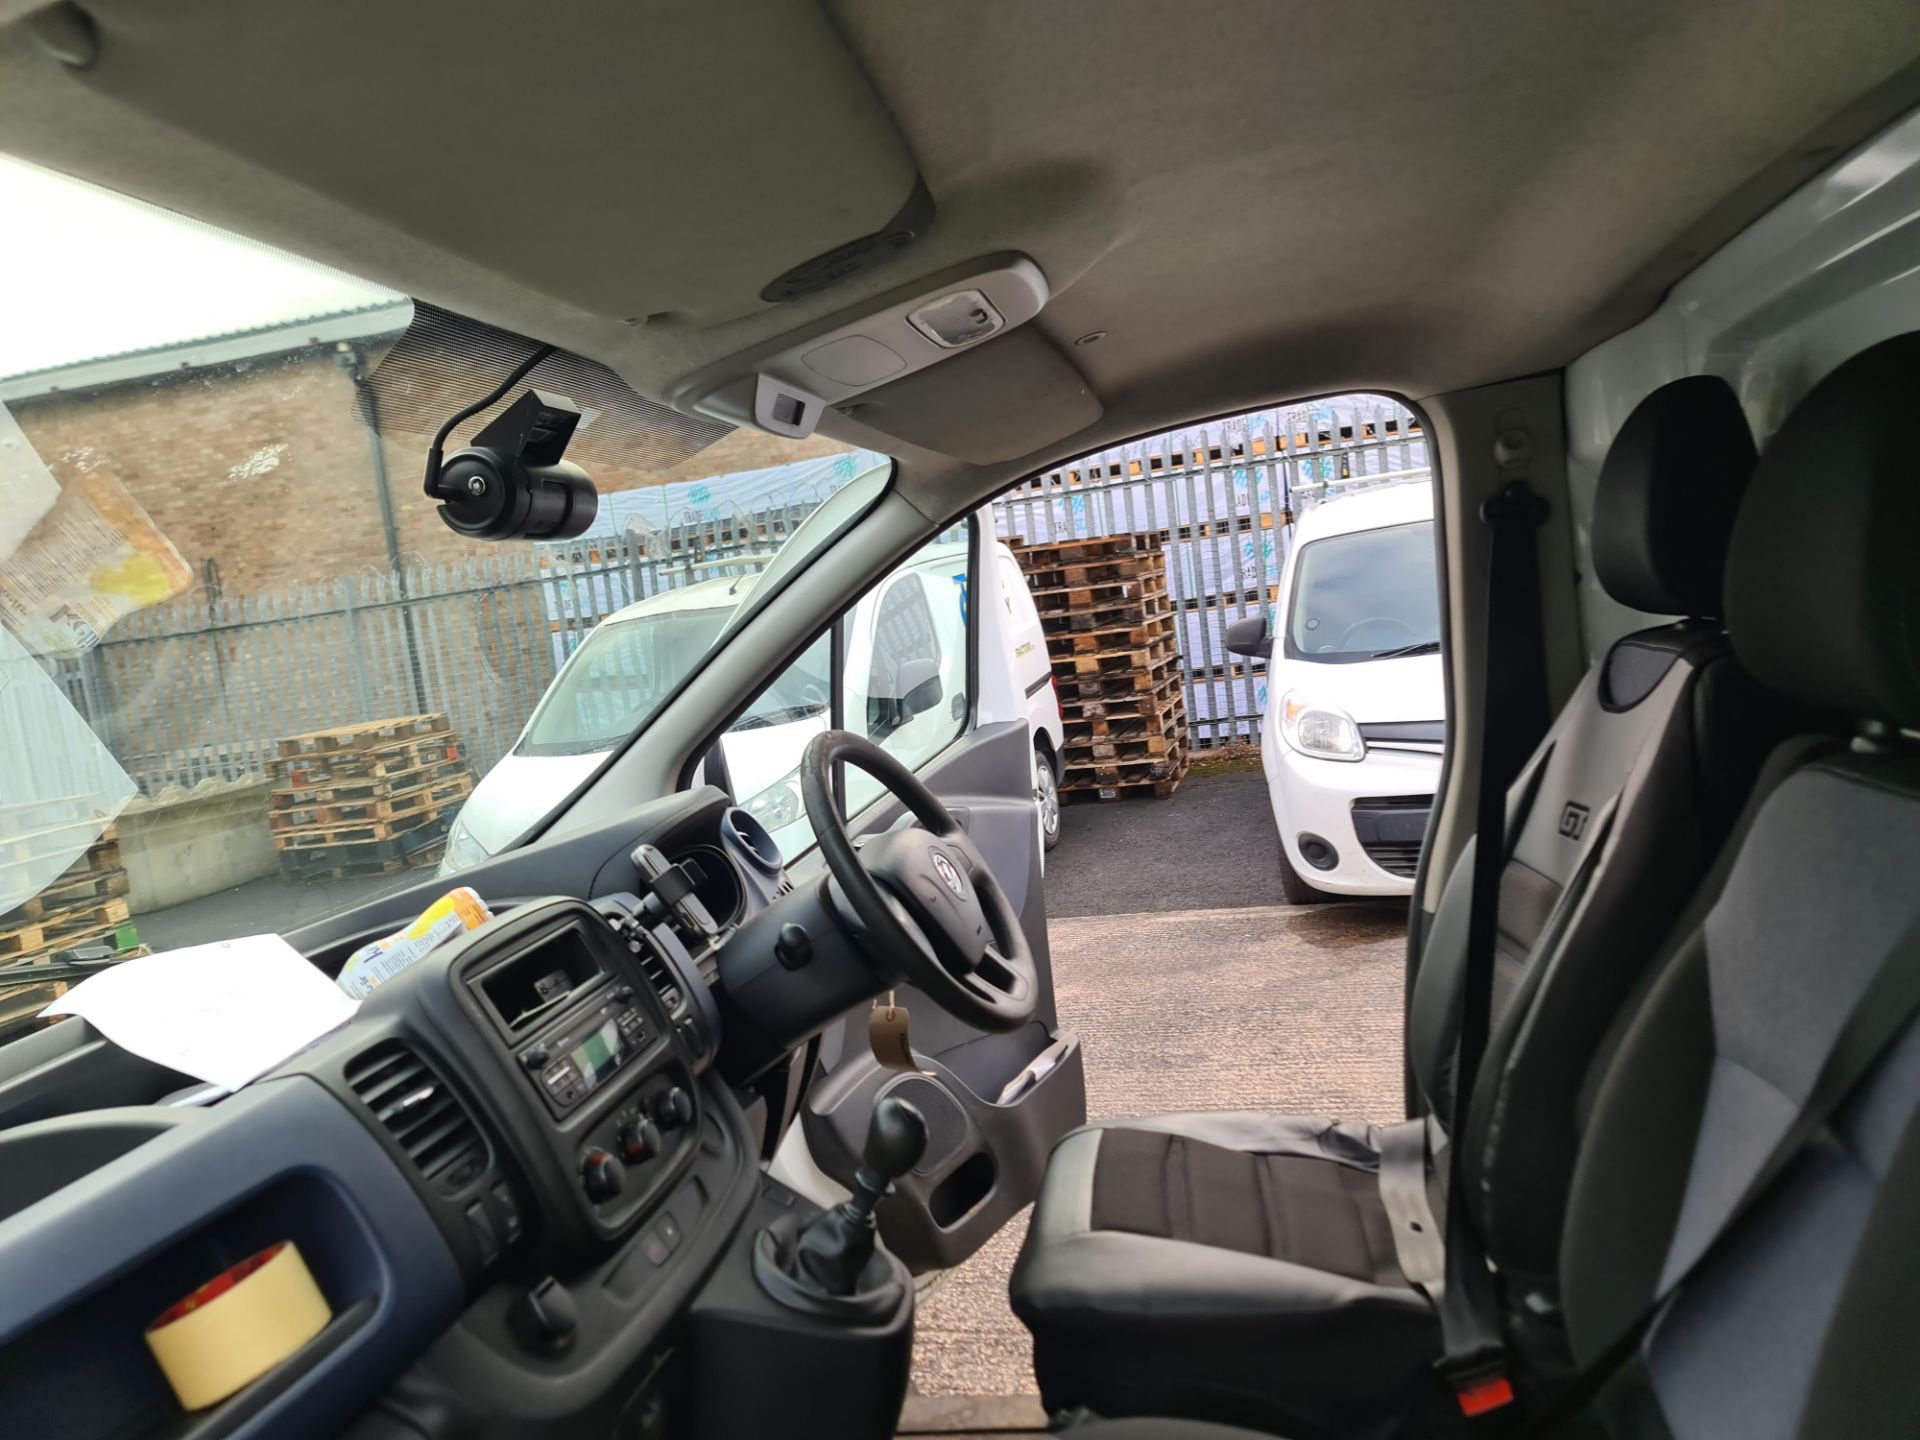 2015 Vauxhall Vivaro 2900 CDTi panel van - Image 58 of 81